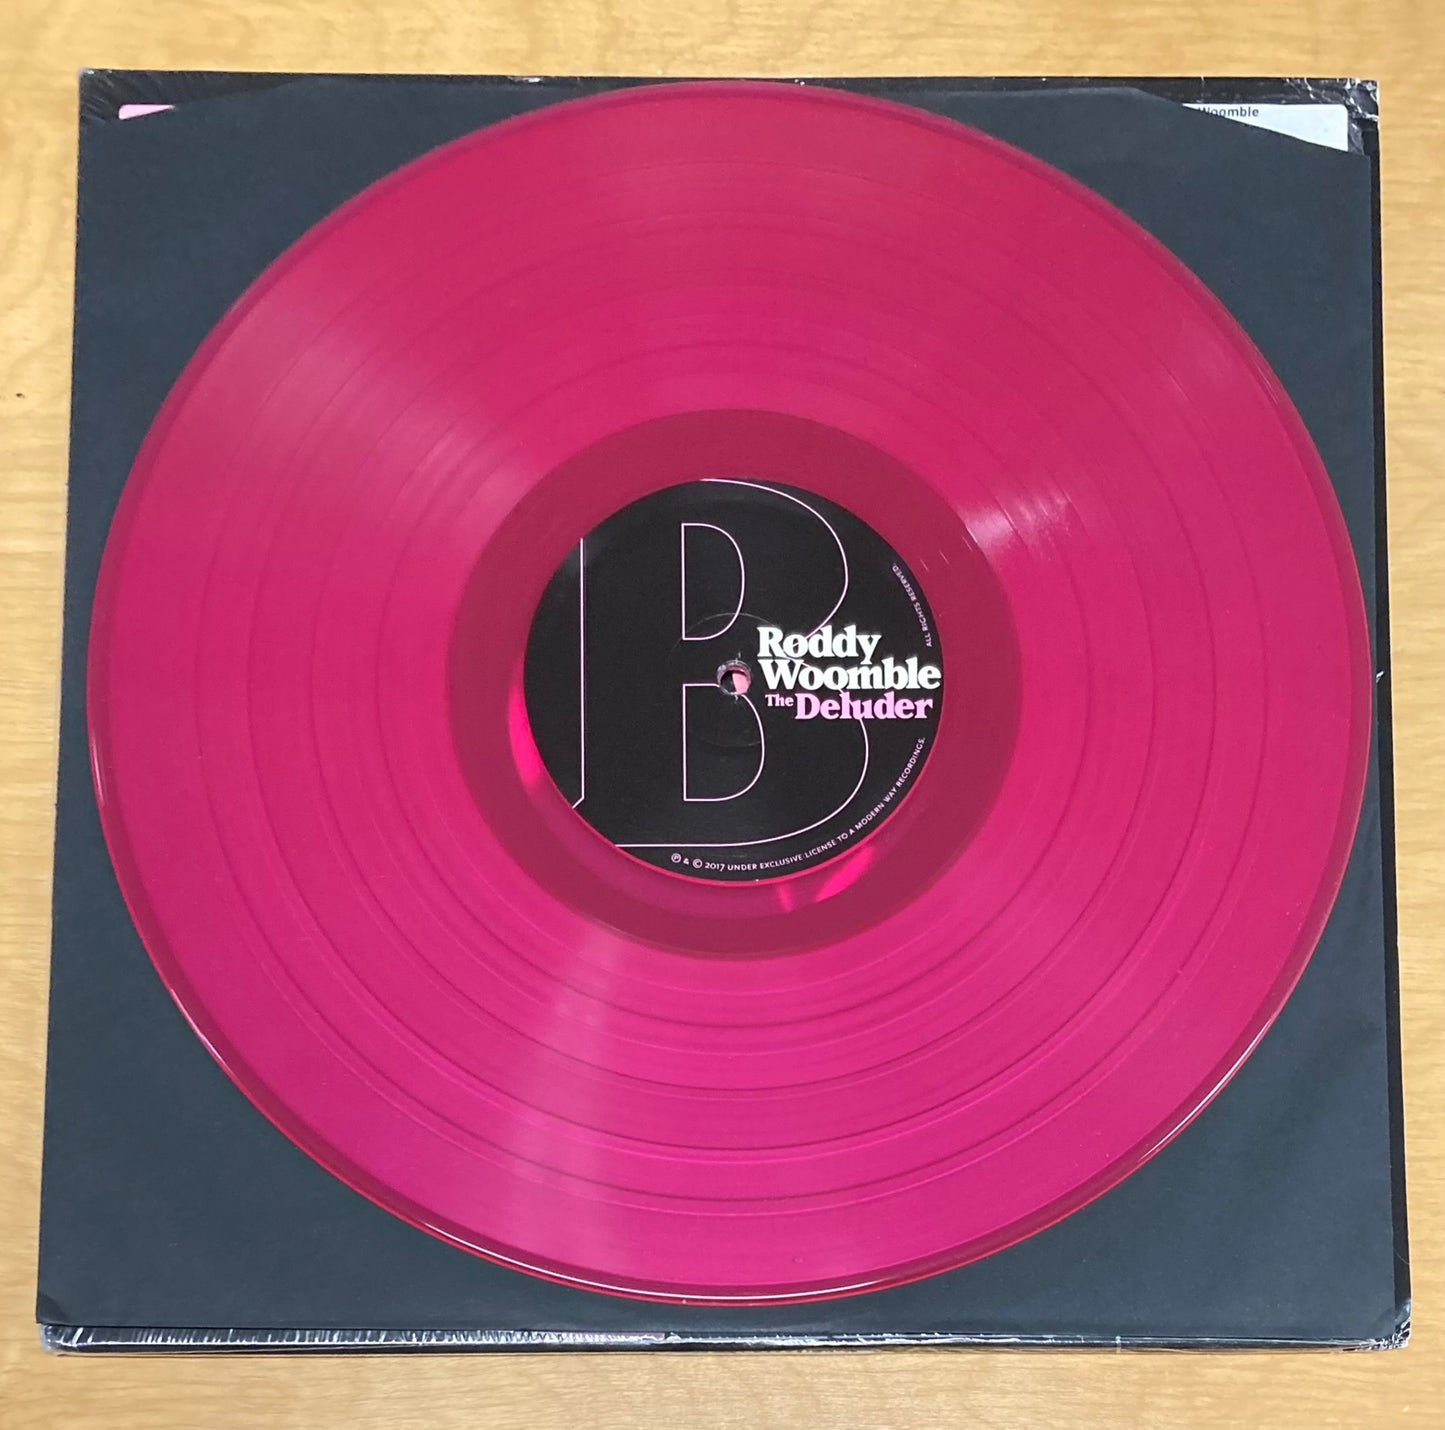 The Deluder - Roddy Woomble *Pink Vinyl, UK Pressing, Shrink Wrap*